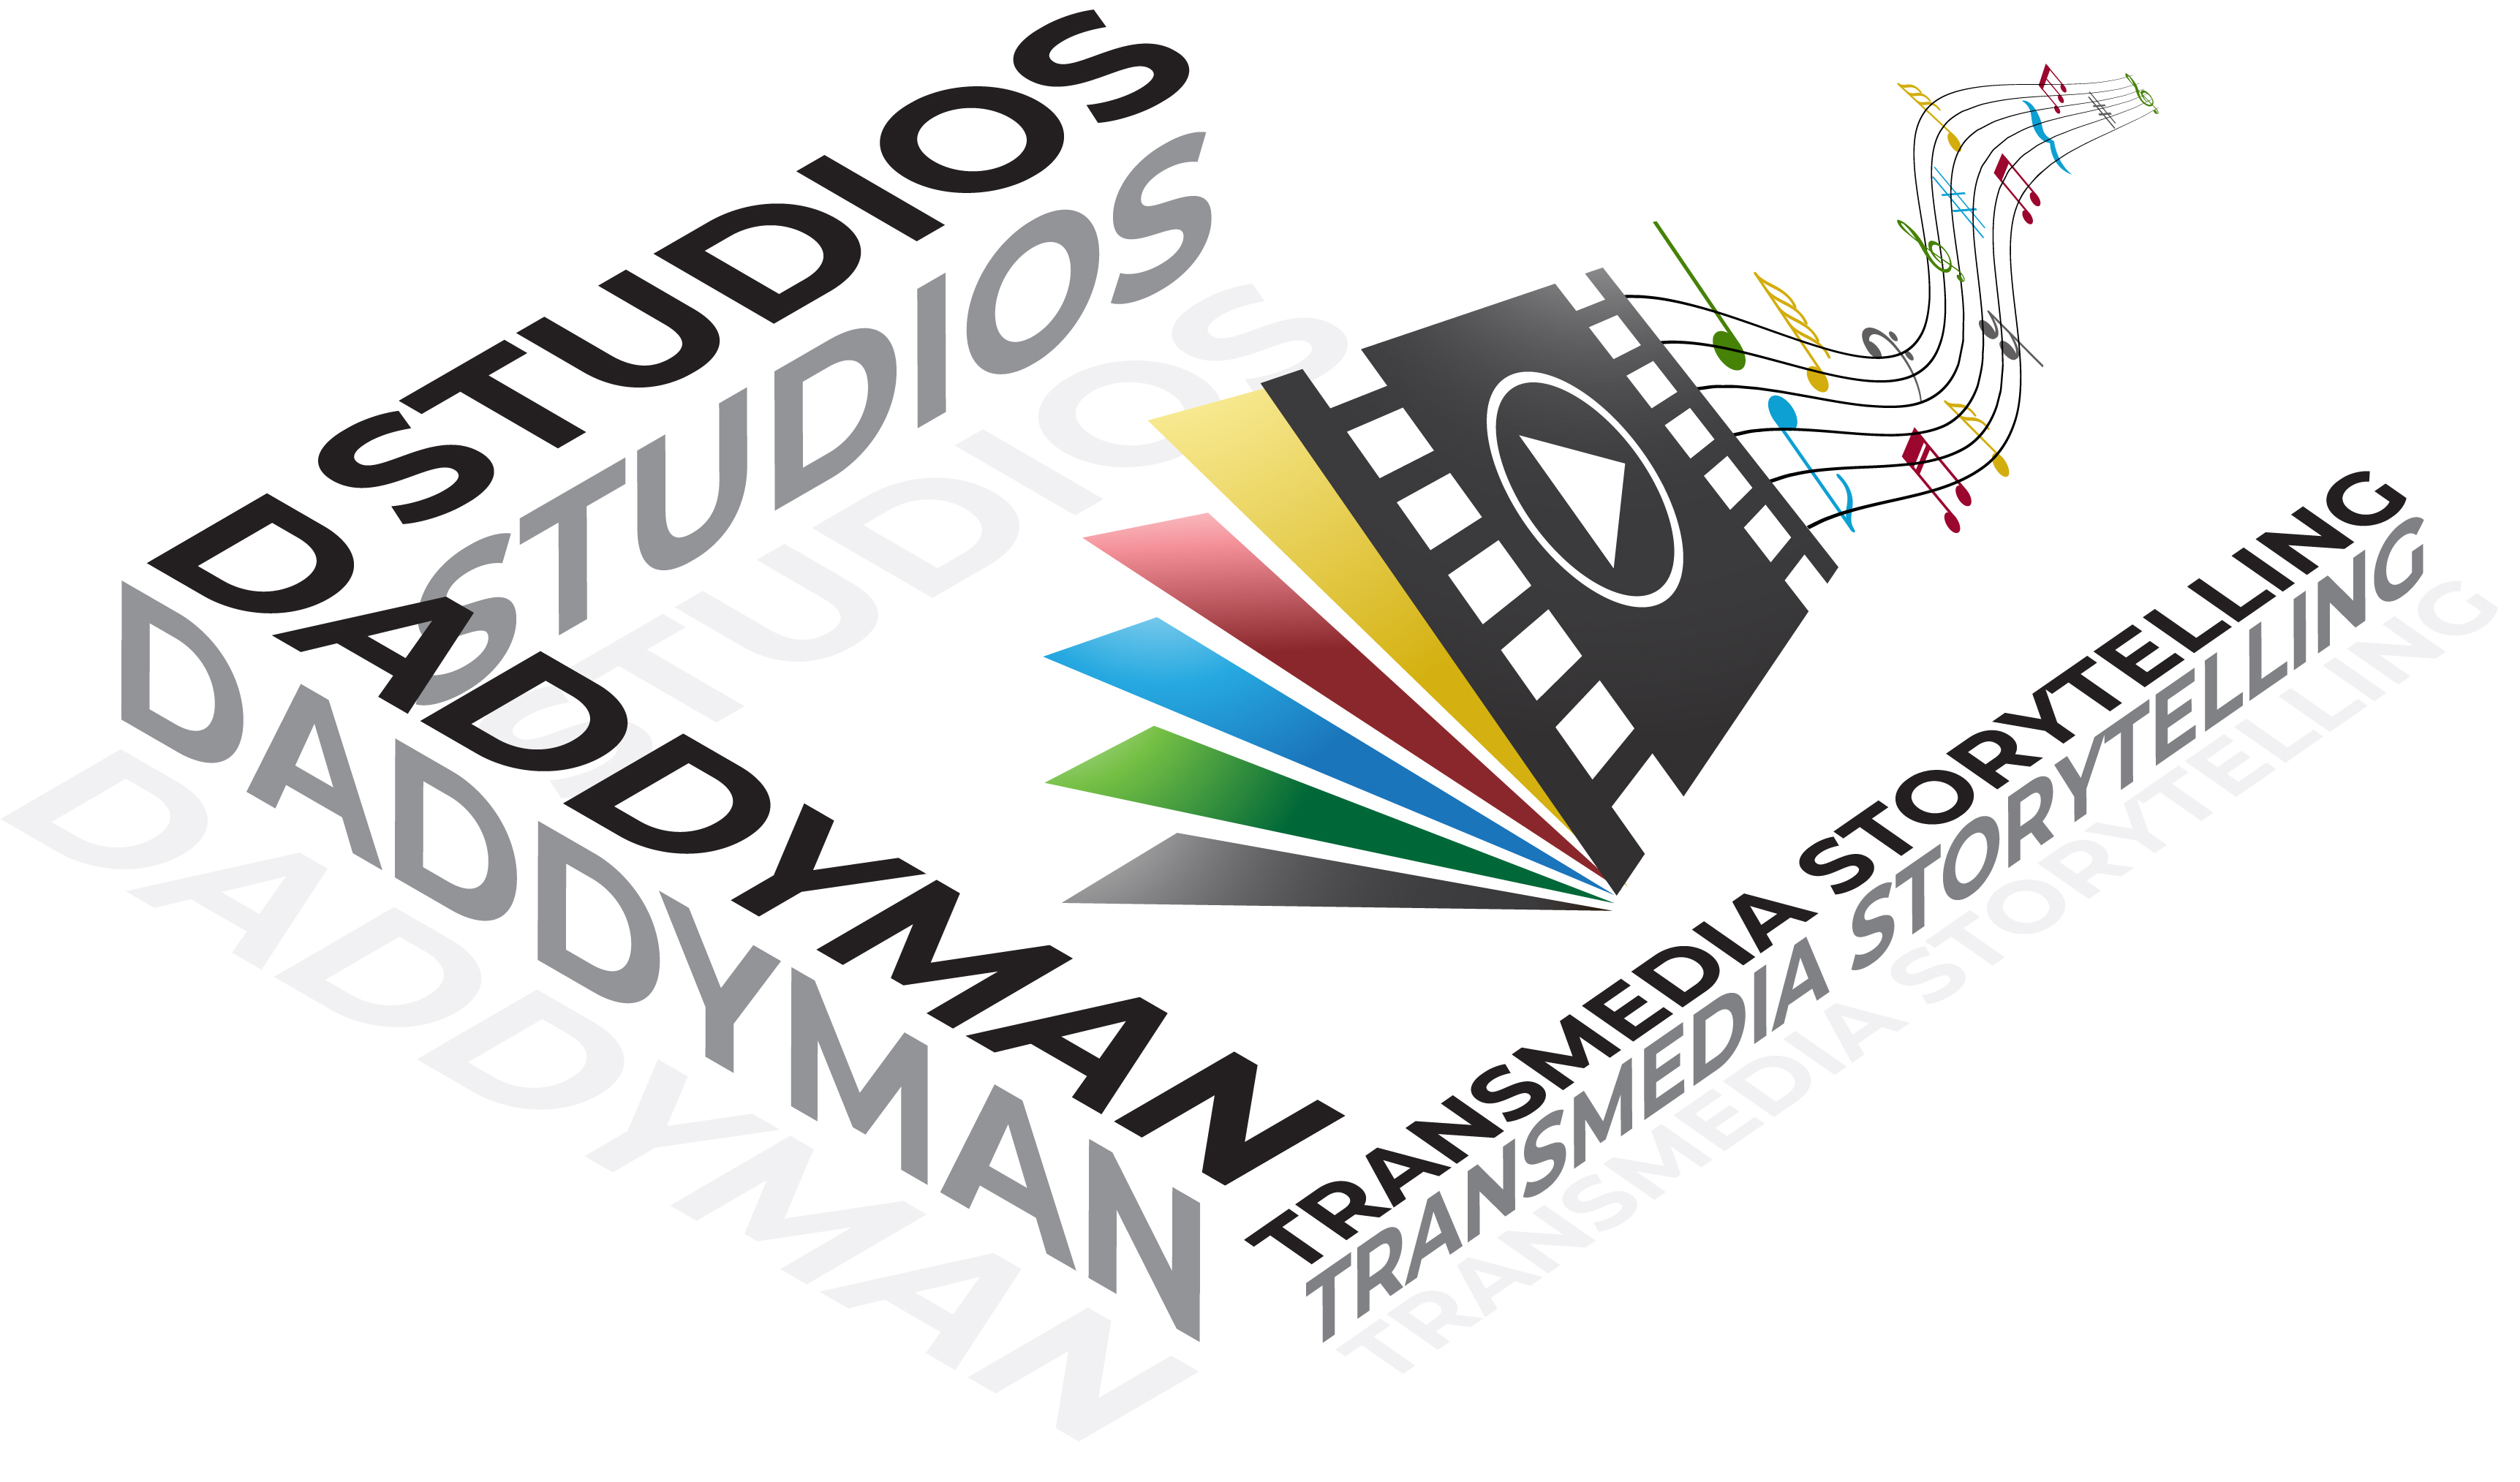 DaddyMan Studios International - Doing All The Good We Can...